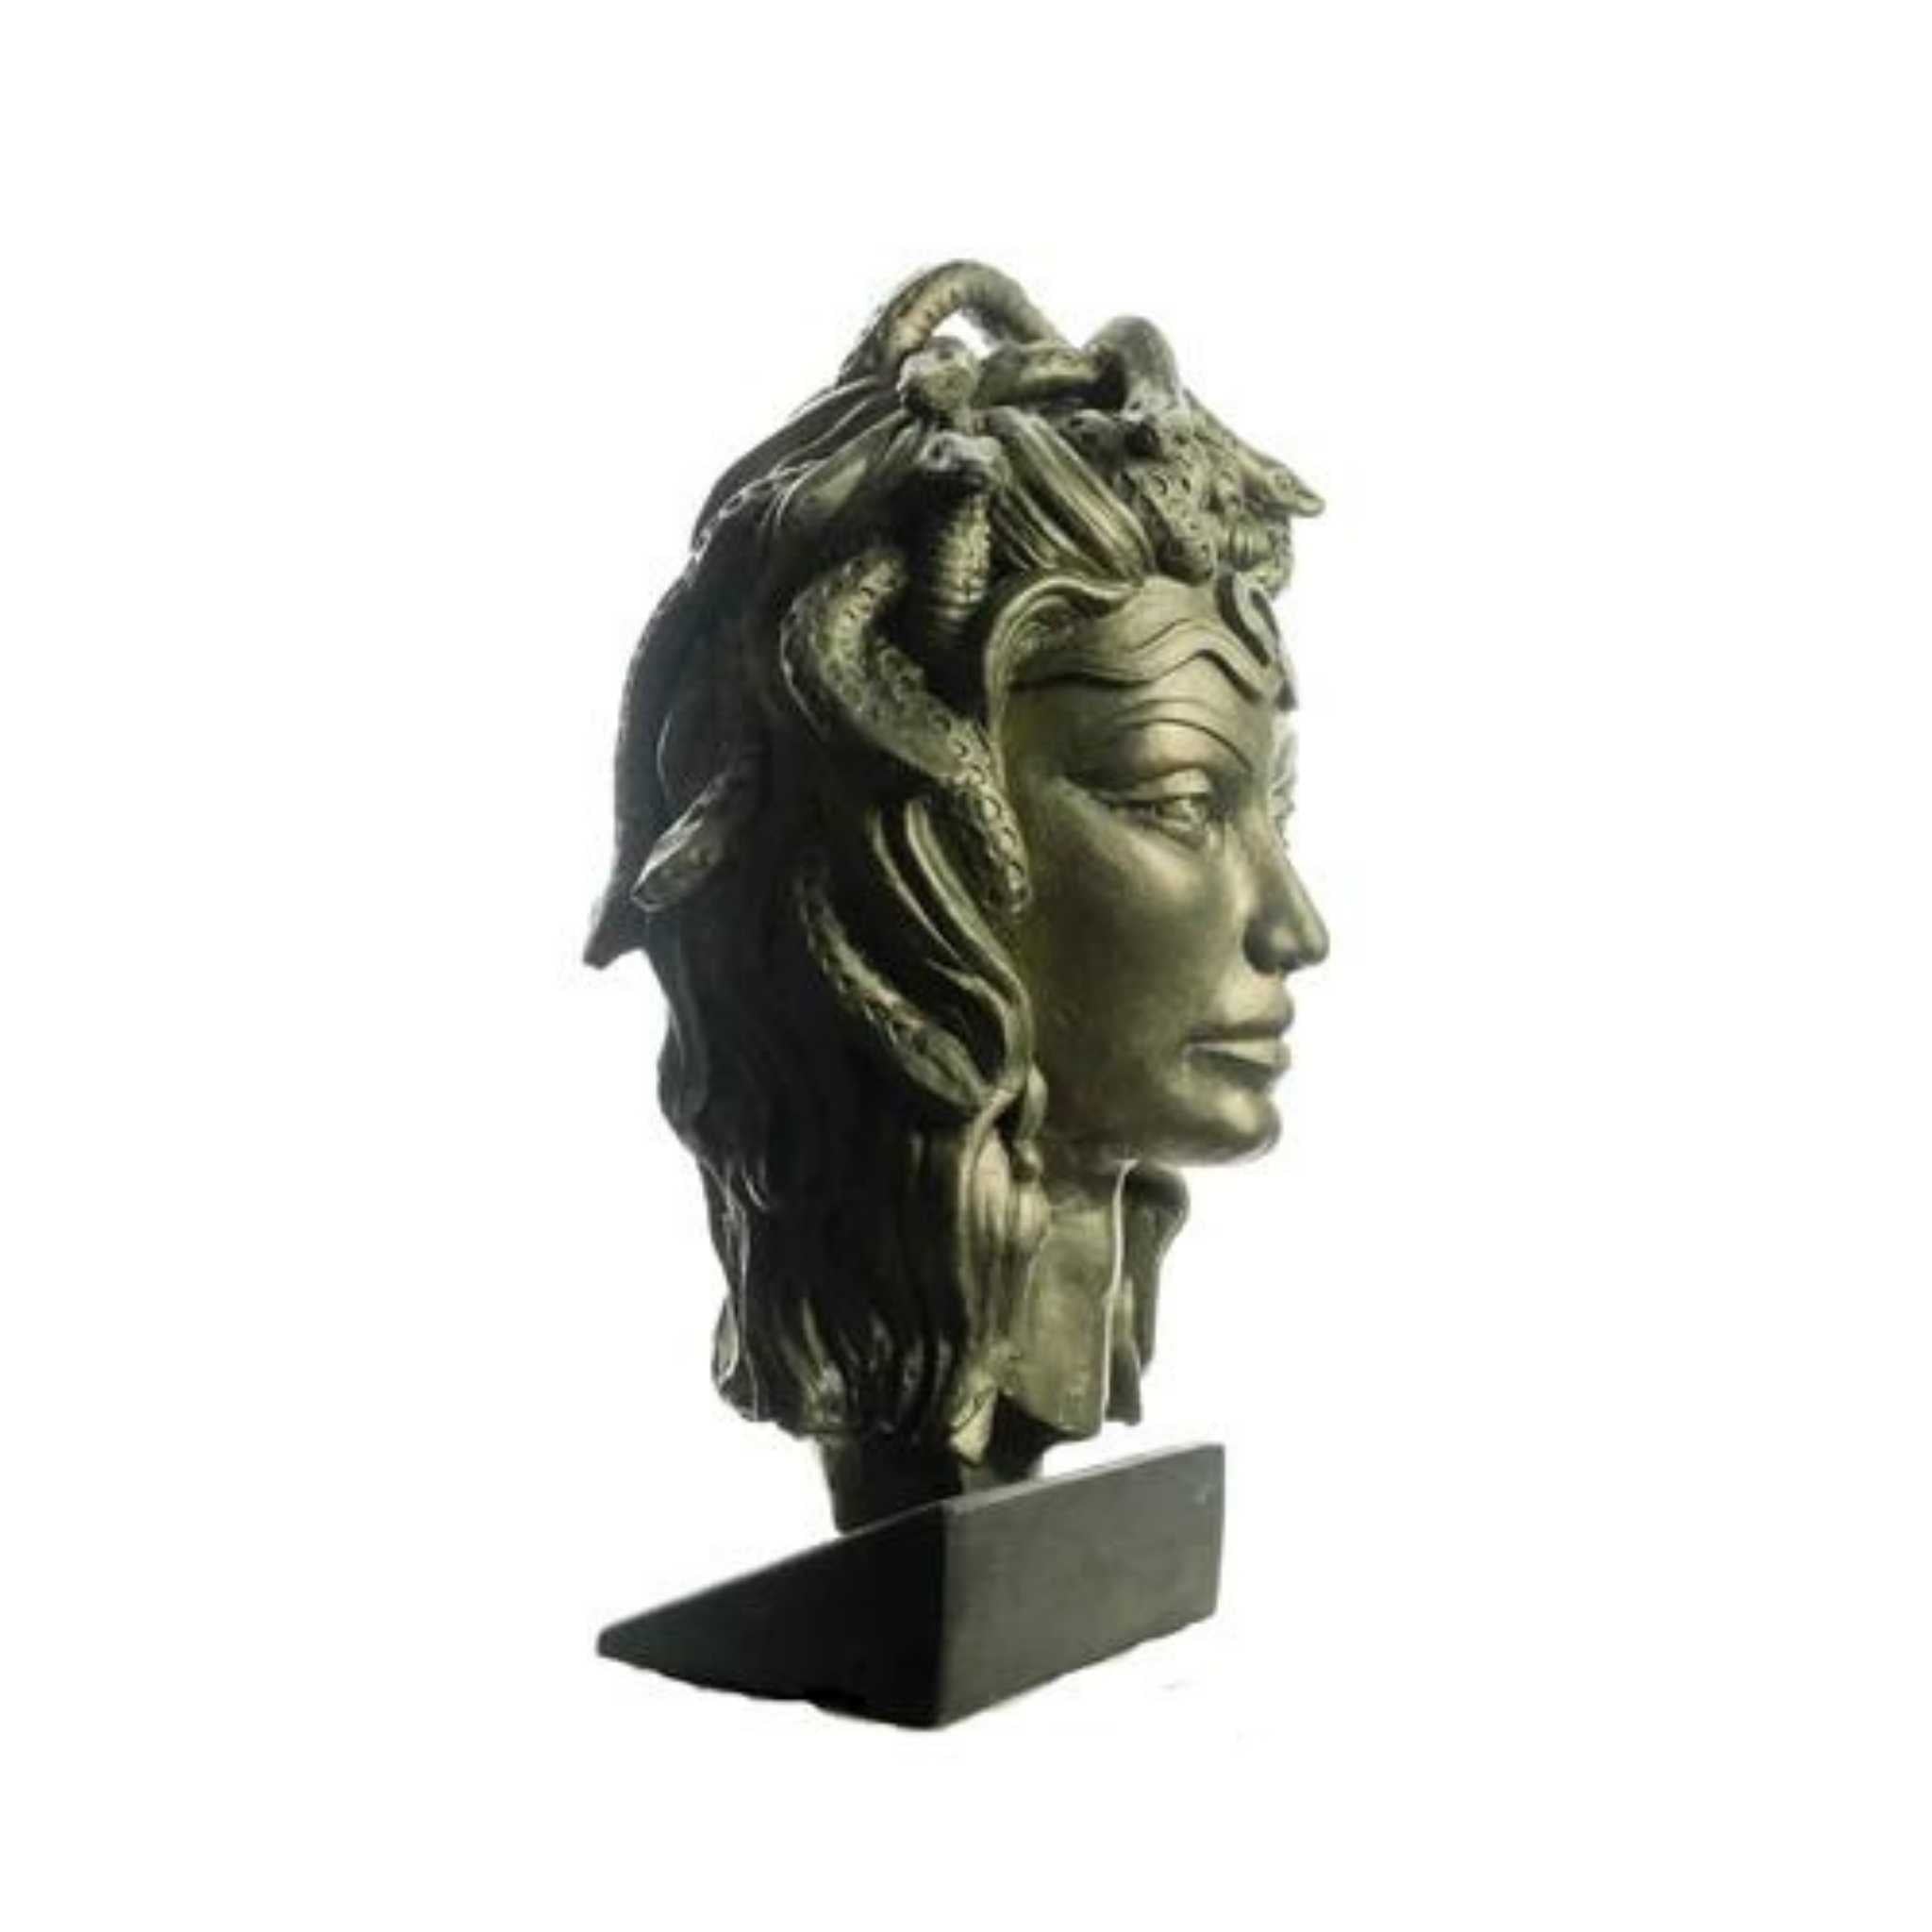 Medusa bust statue